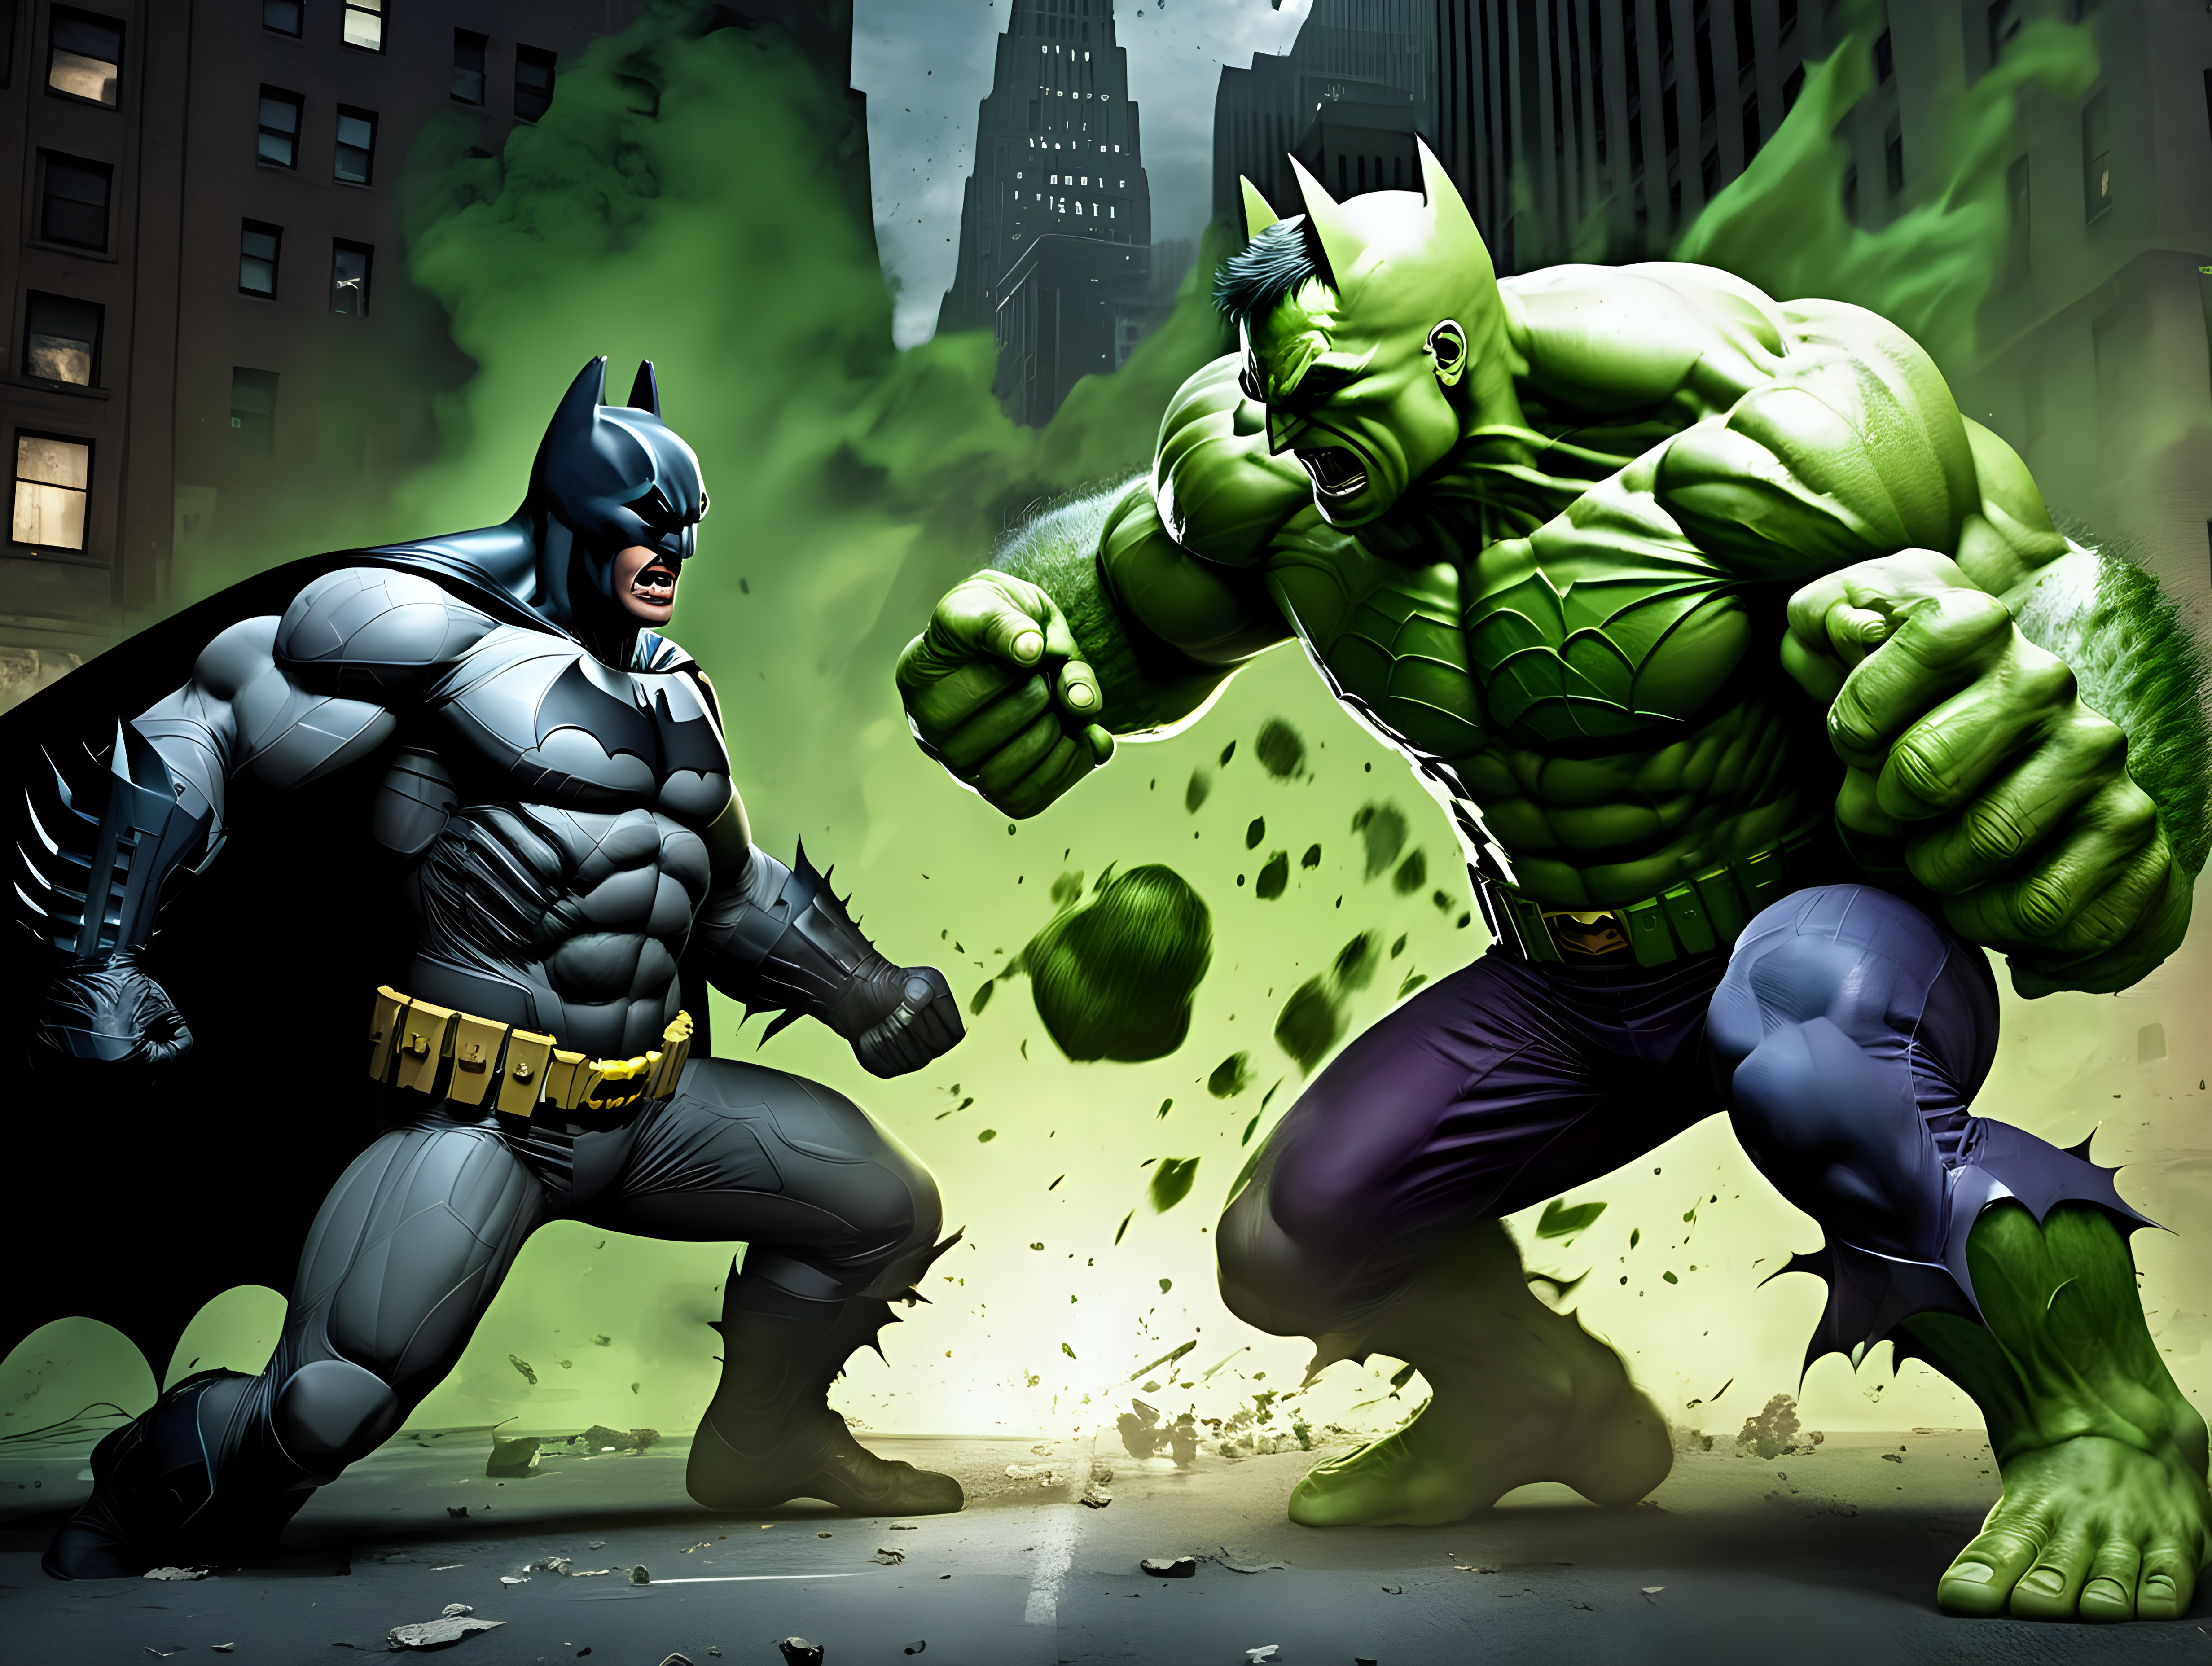 The Batman fighting the Hulk